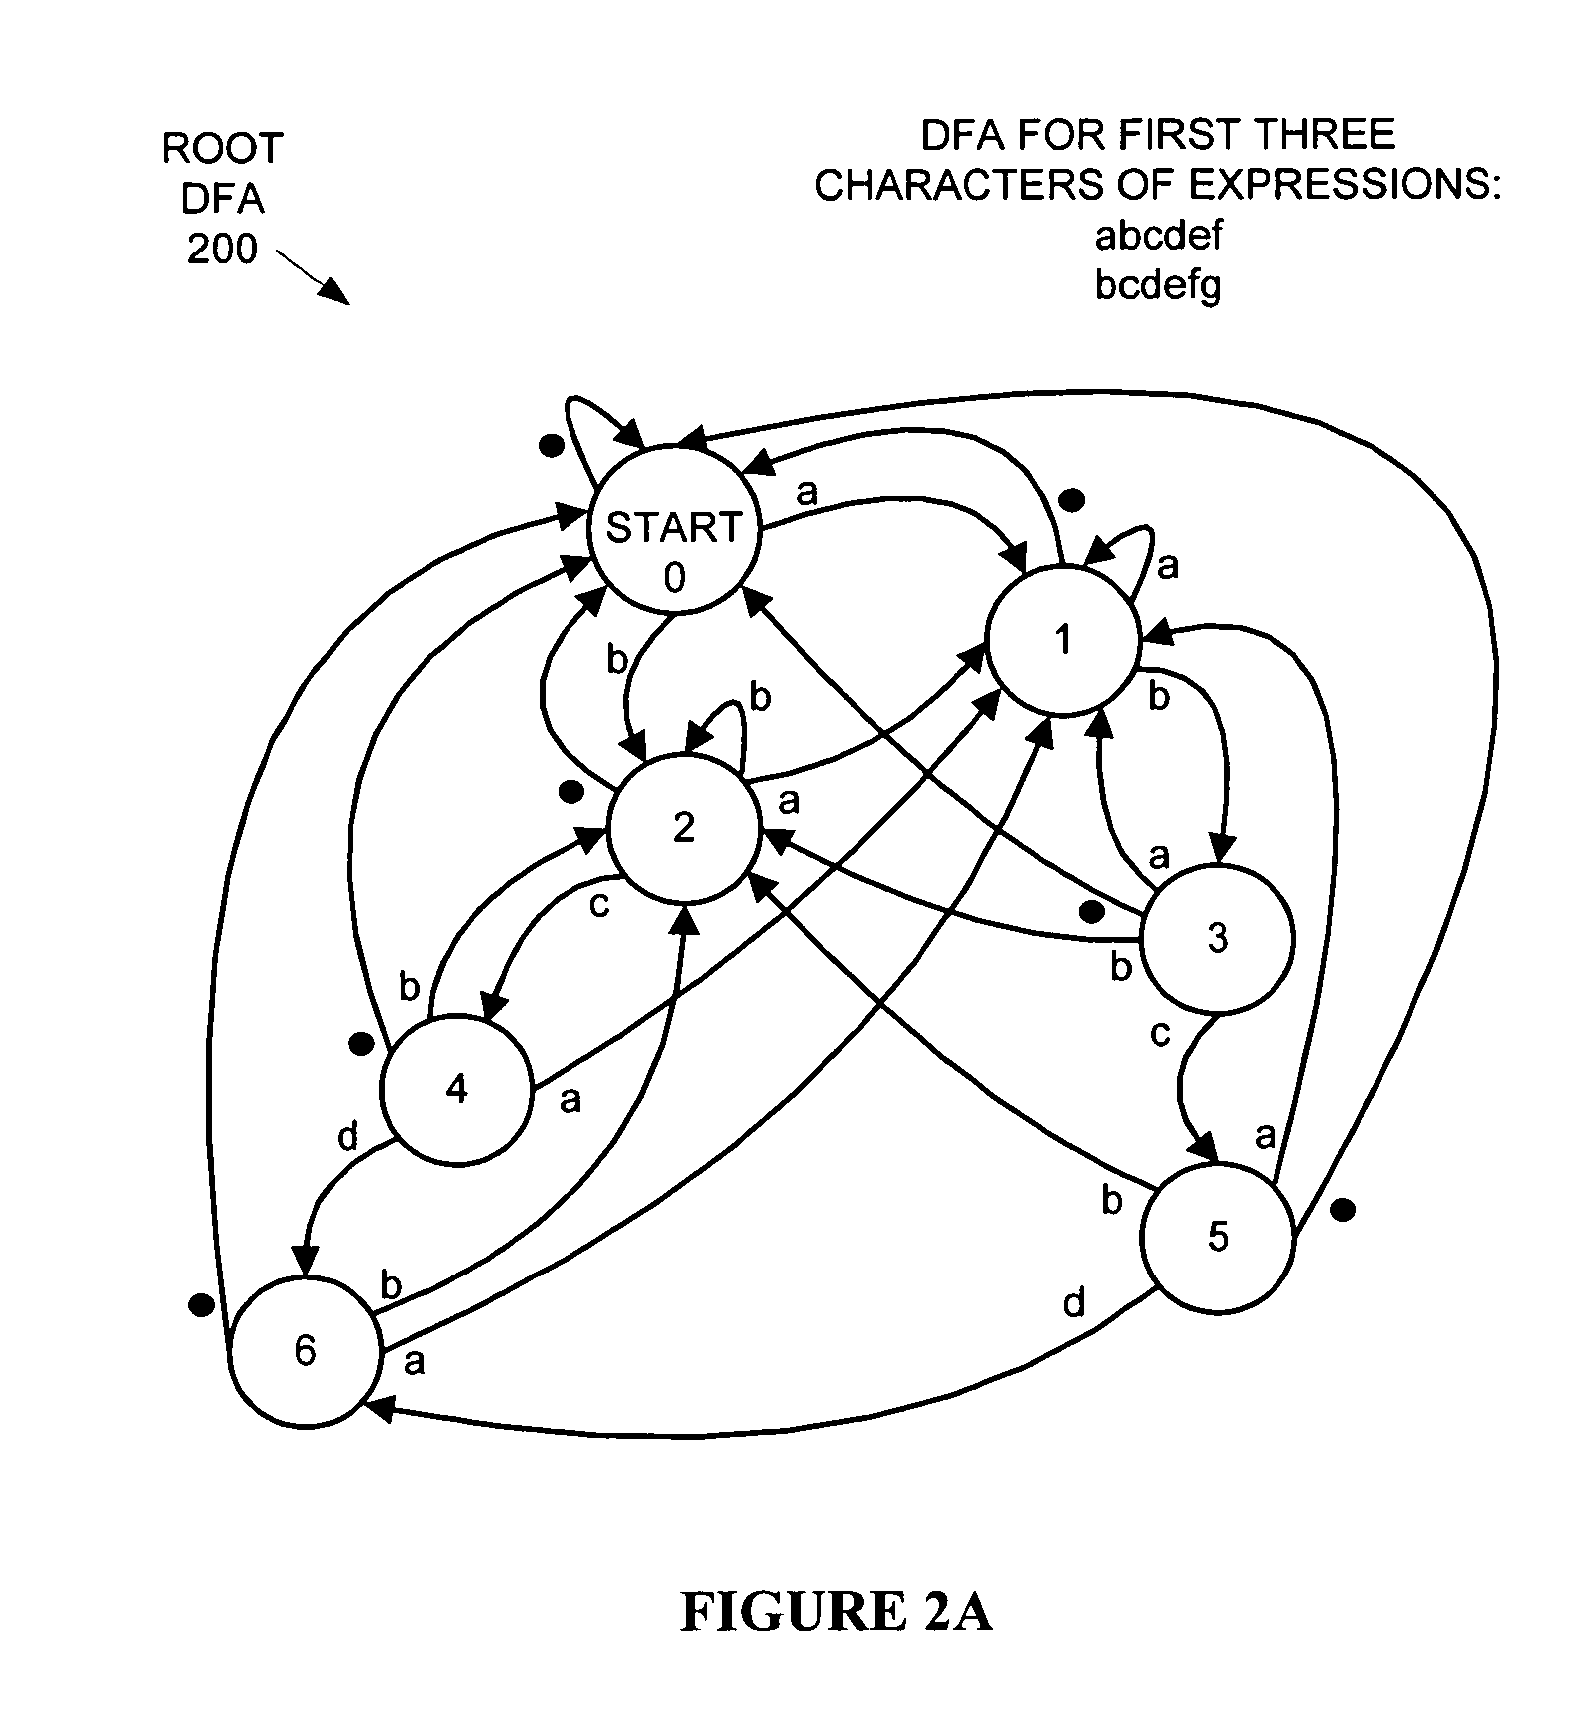 Hierarchical tree of deterministic finite automata